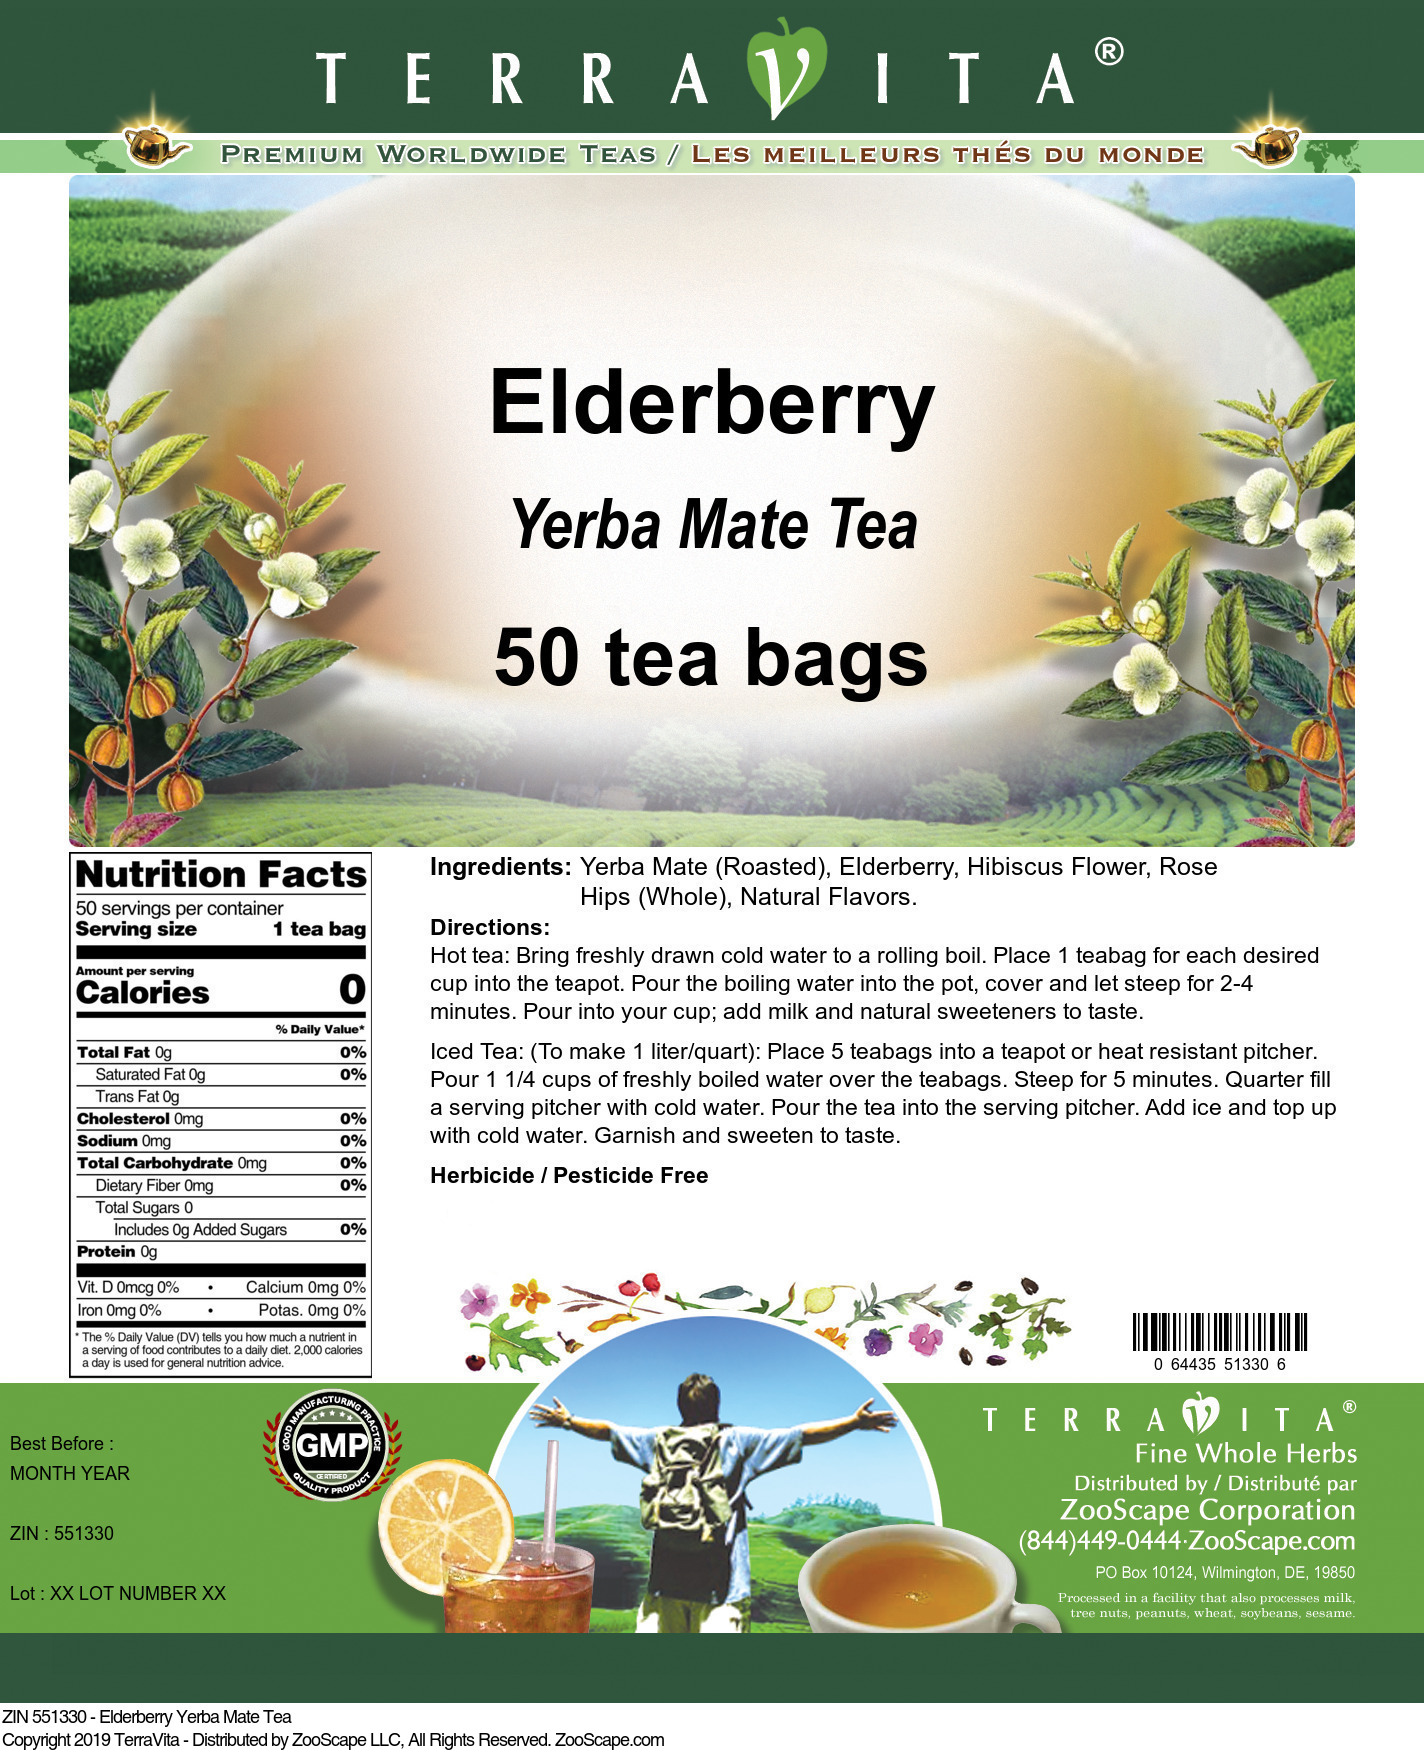 Elderberry Yerba Mate Tea - Label